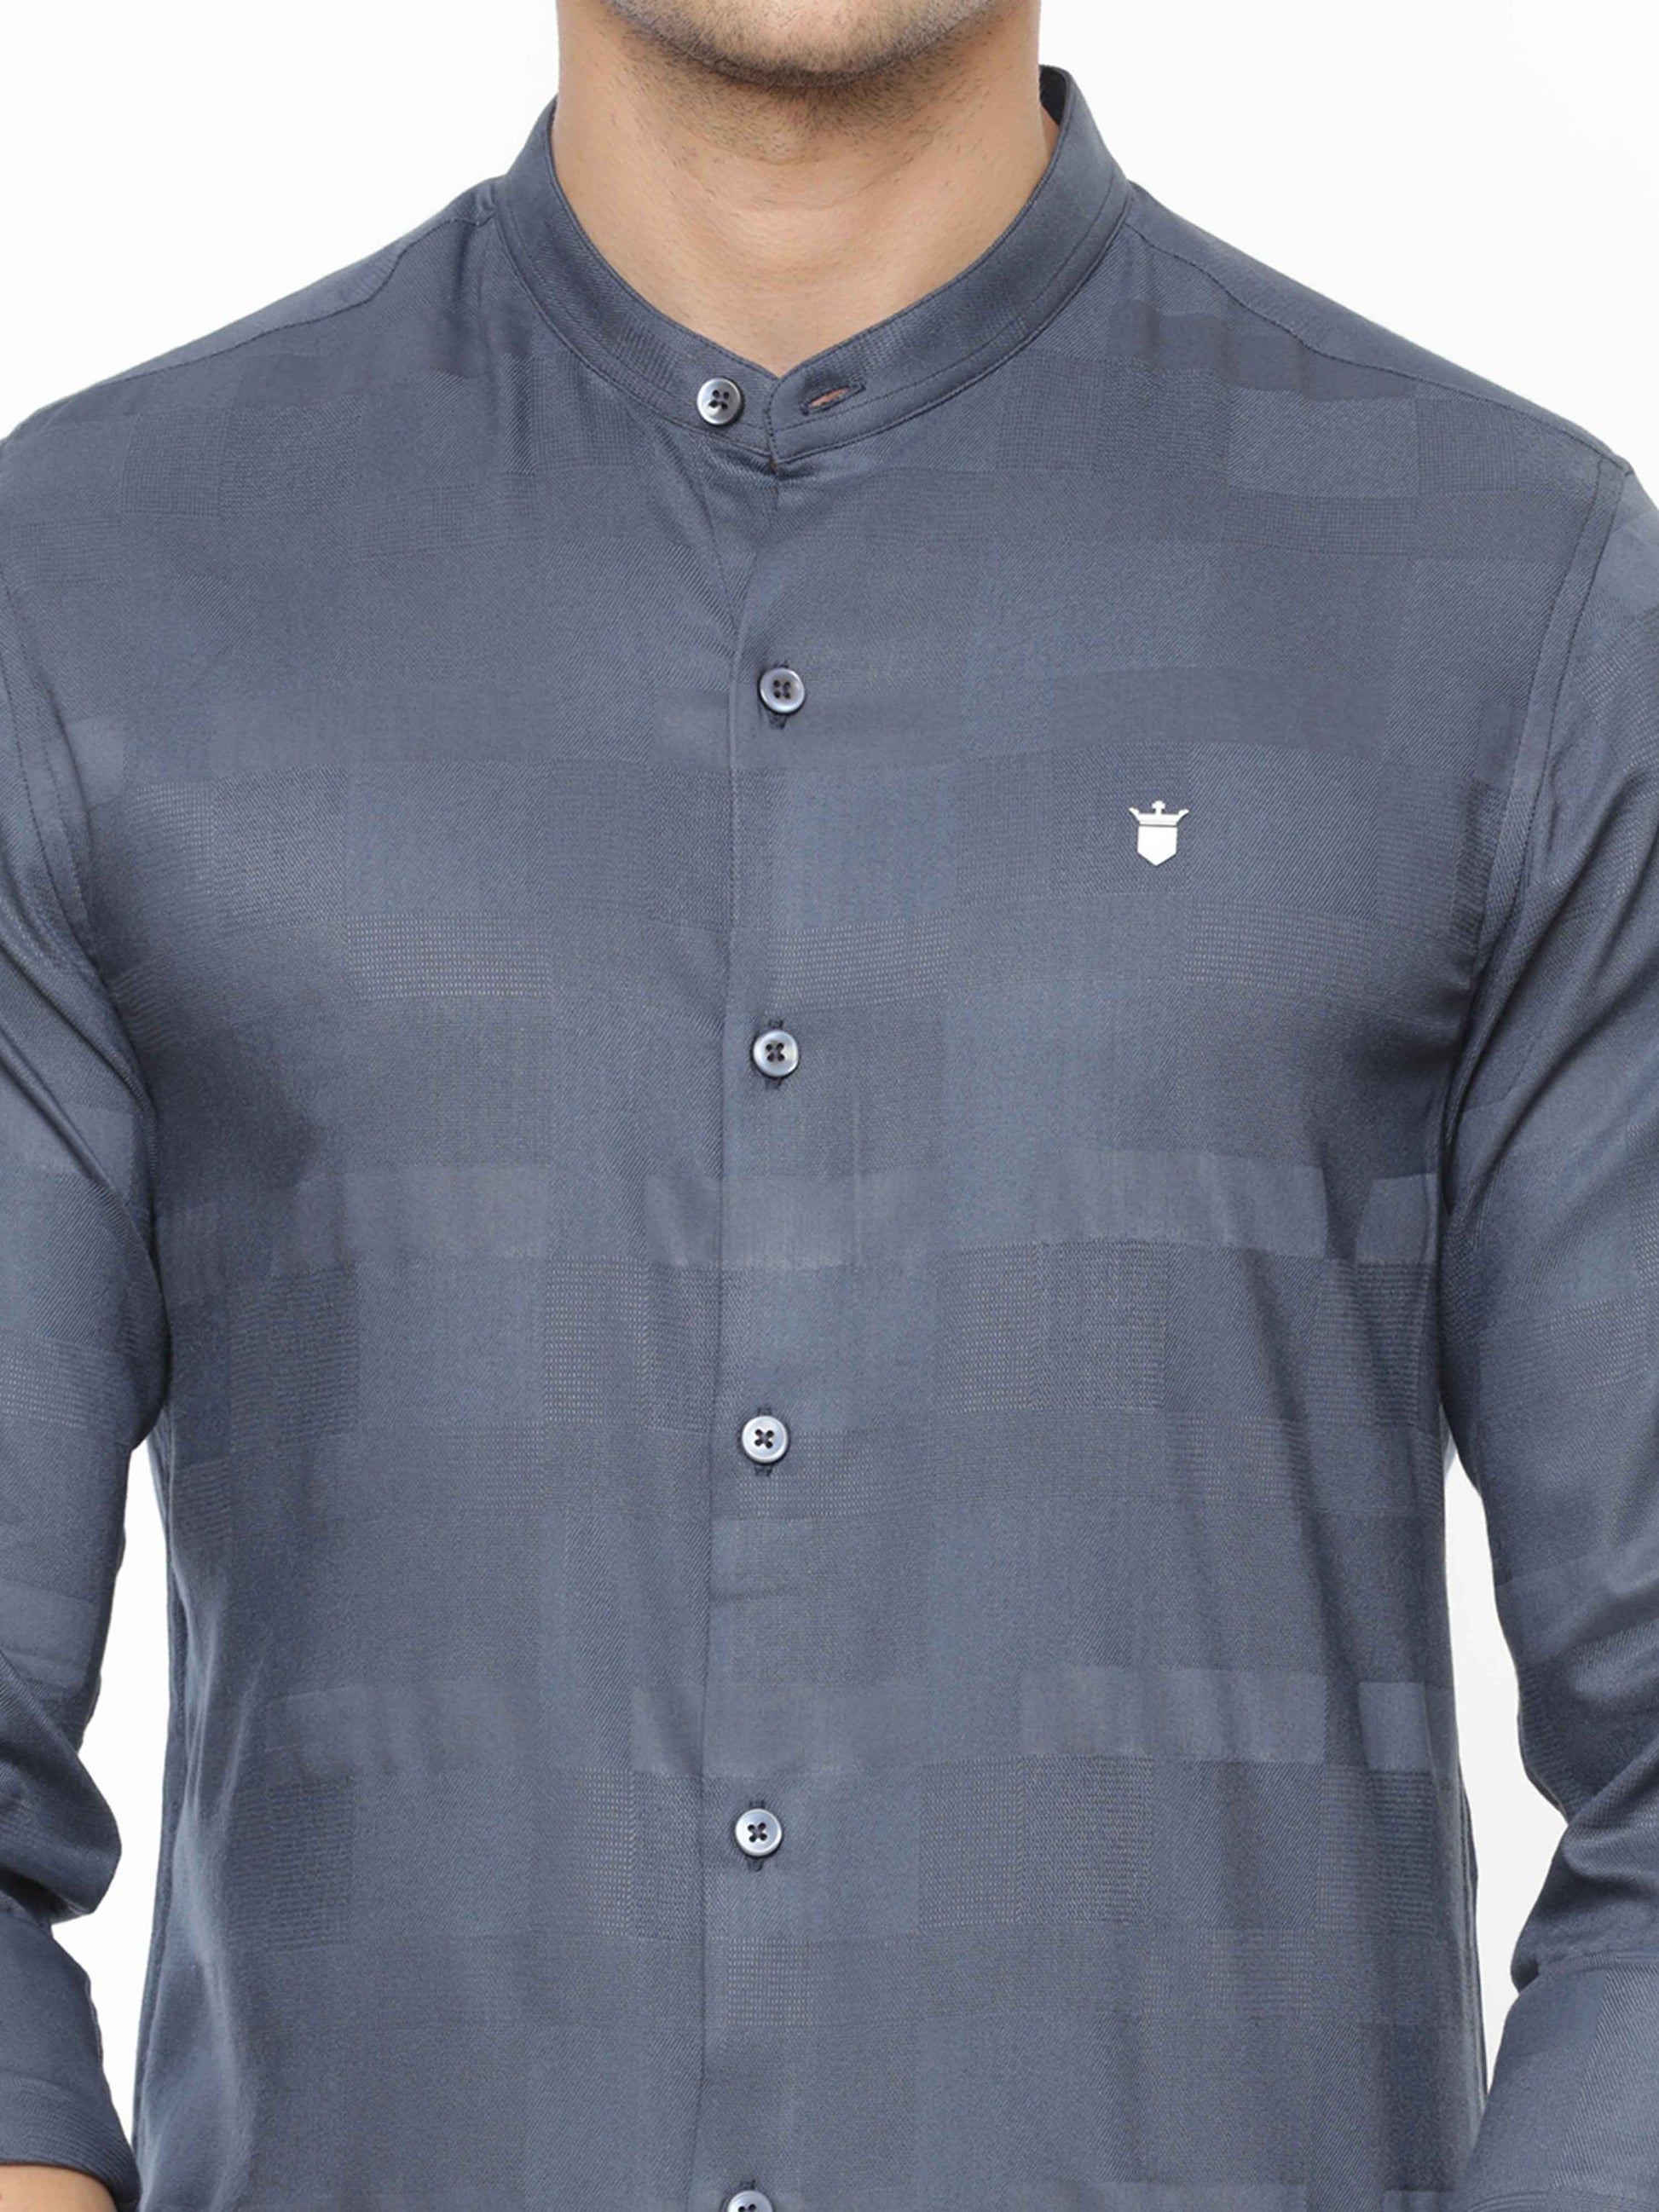 Chinese Collar Solid Grey Shirt